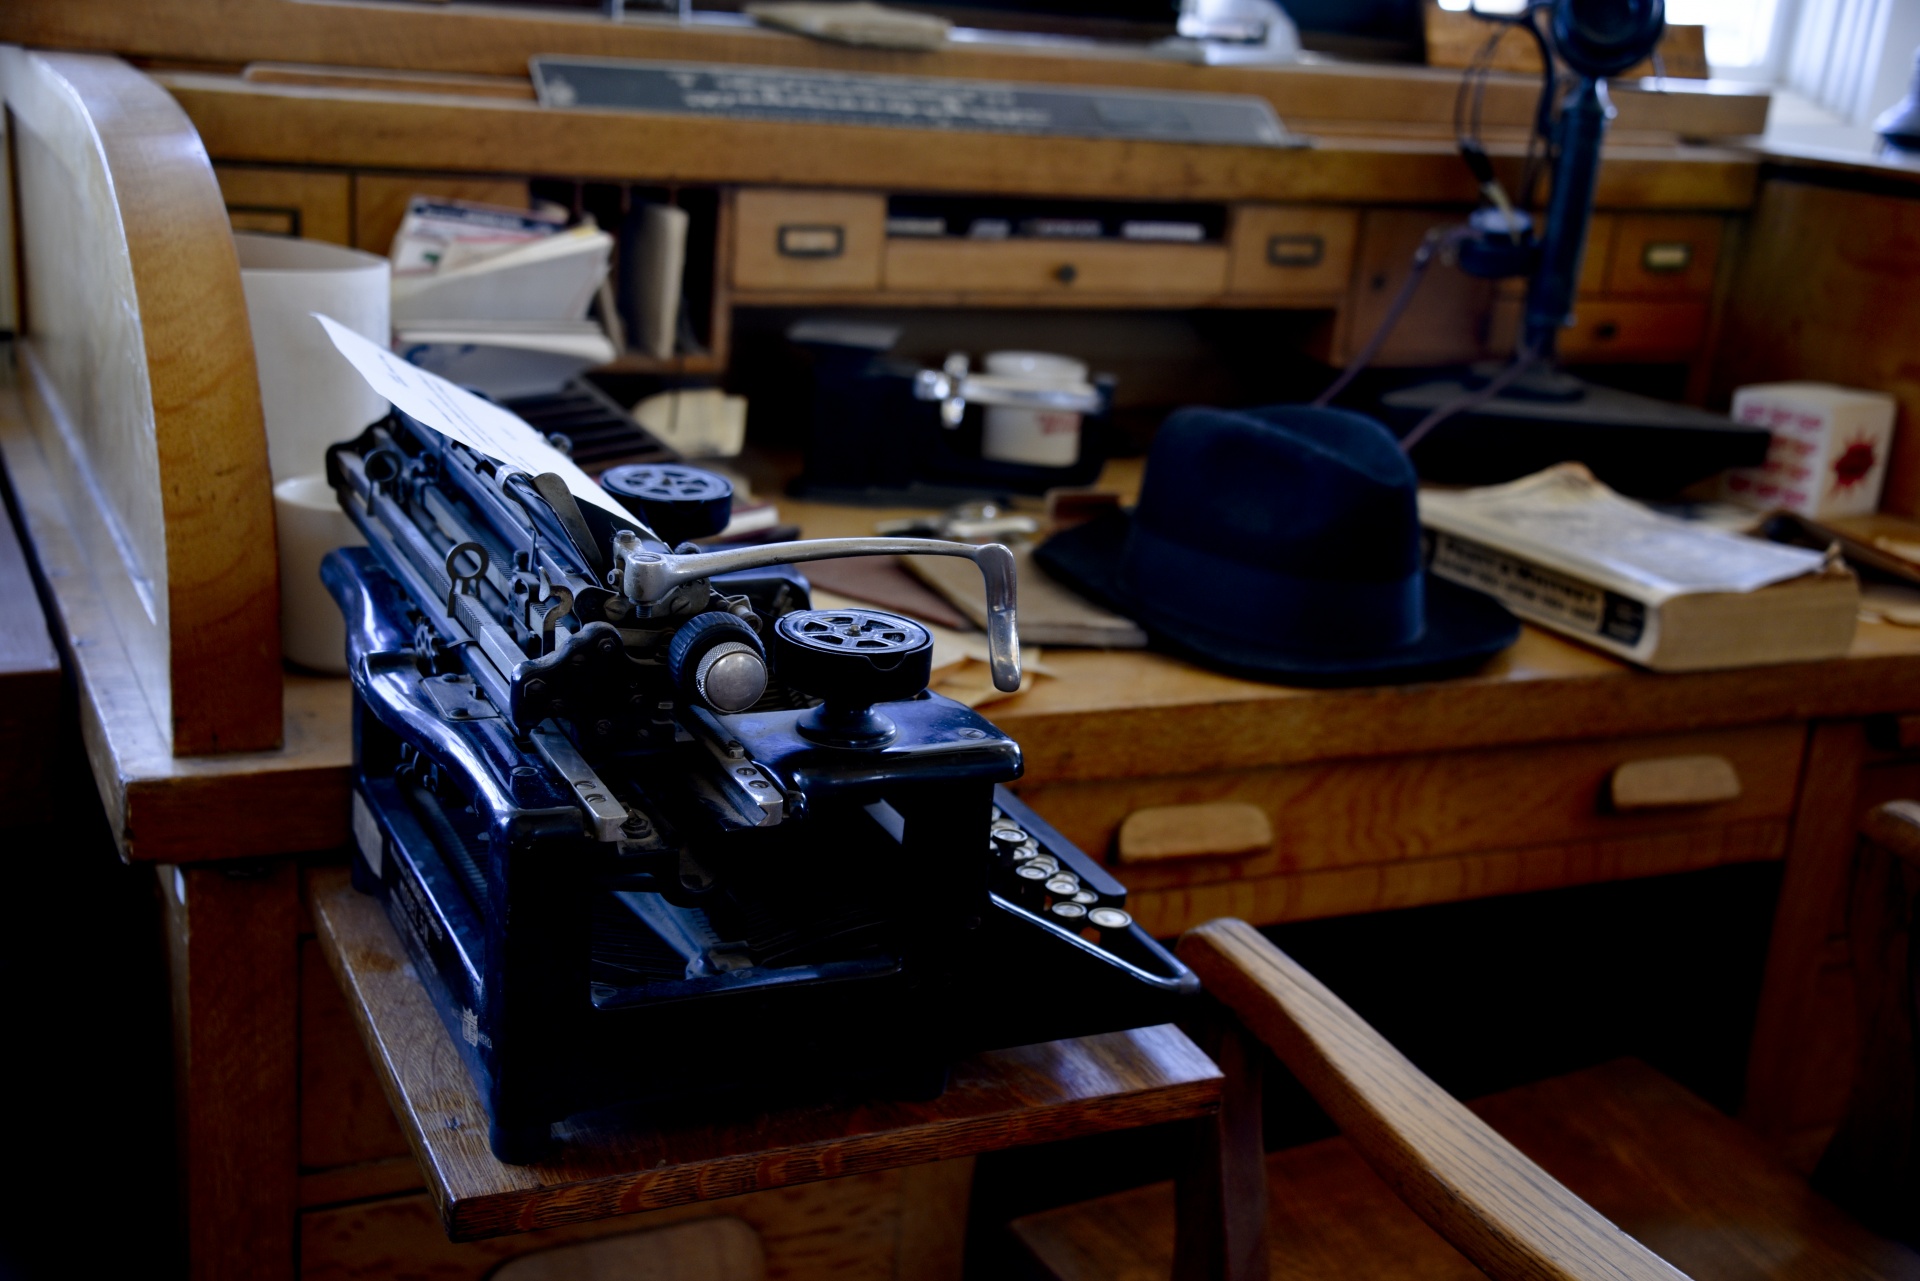 Antique Desk And Typewriter